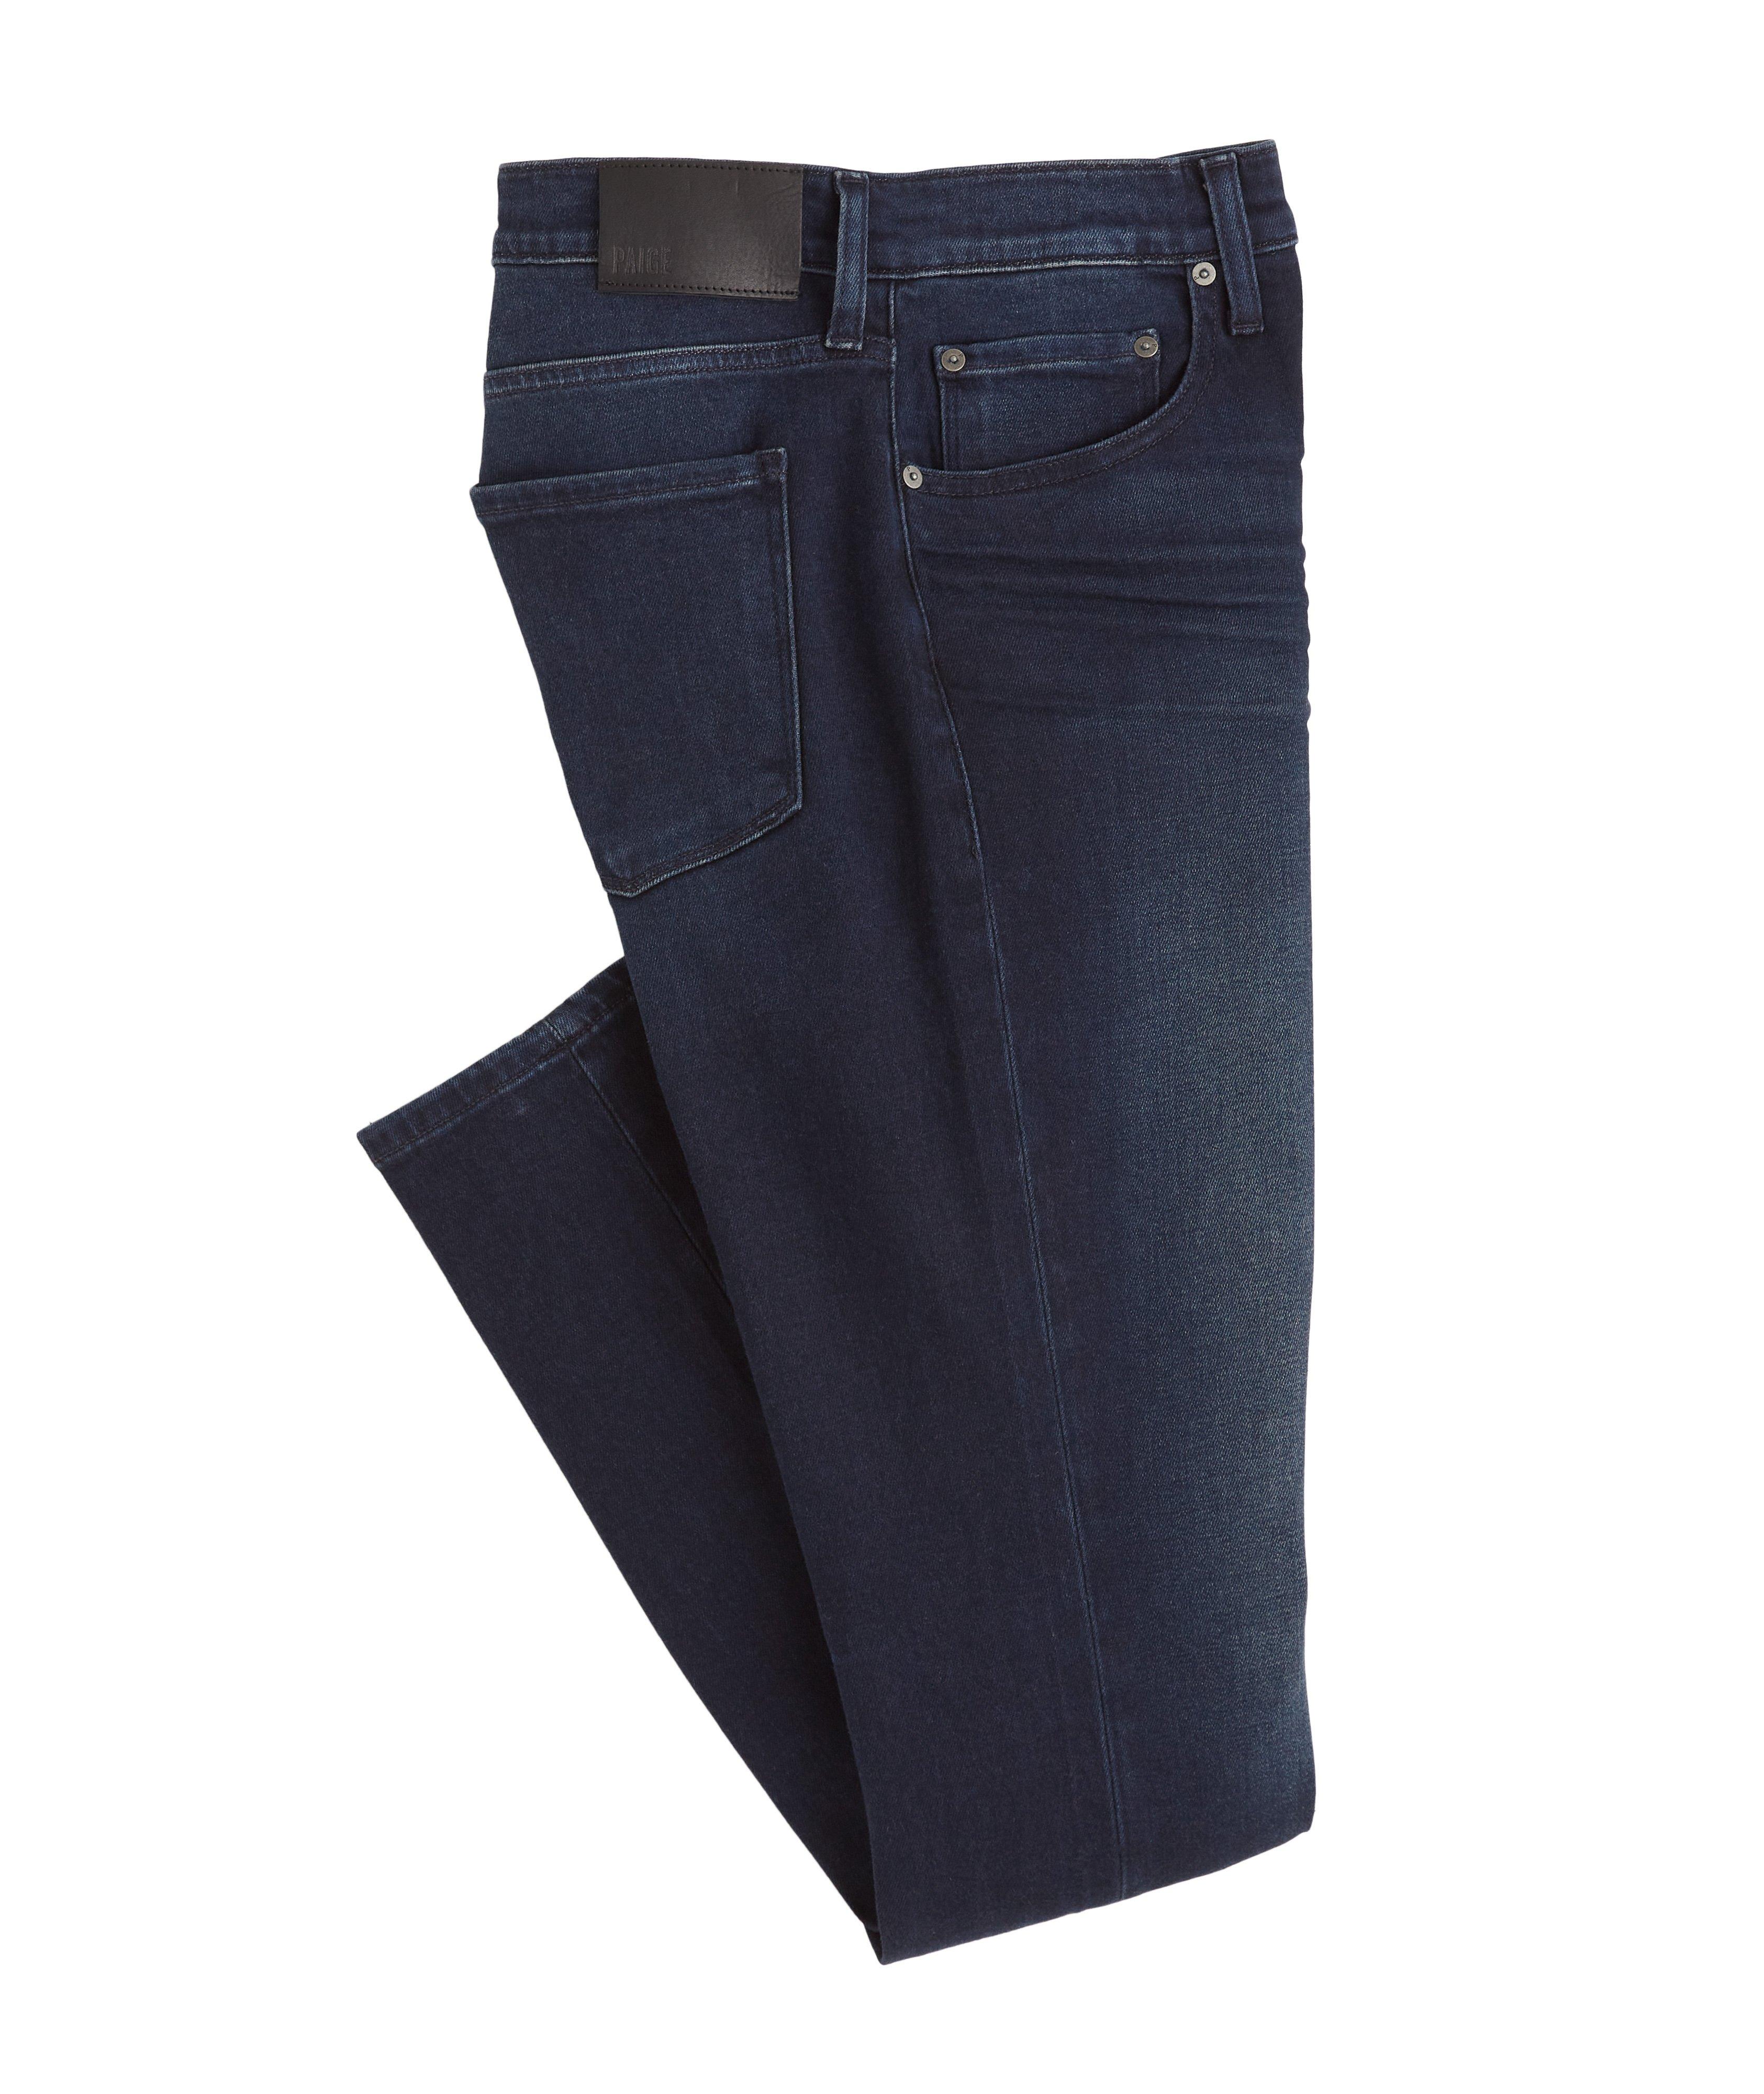 Lennox Vintage Slim Fit Jeans image 0